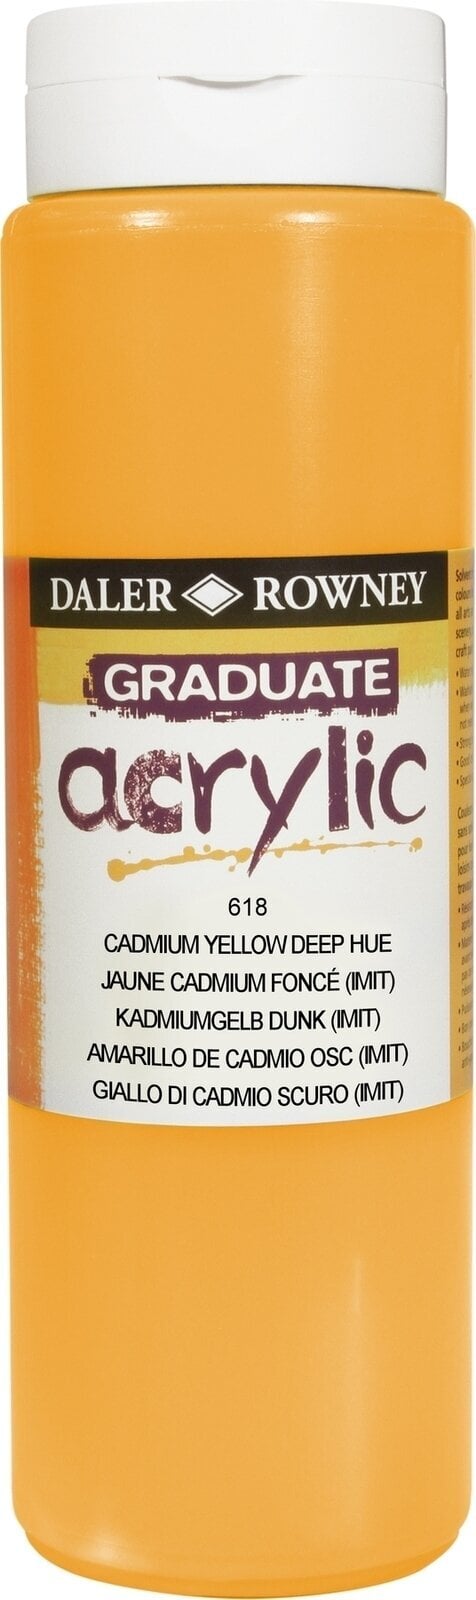 Akrylmaling Daler Rowney Graduate Akrylmaling Cadmium Yellow Deep Hue 500 ml 1 stk.